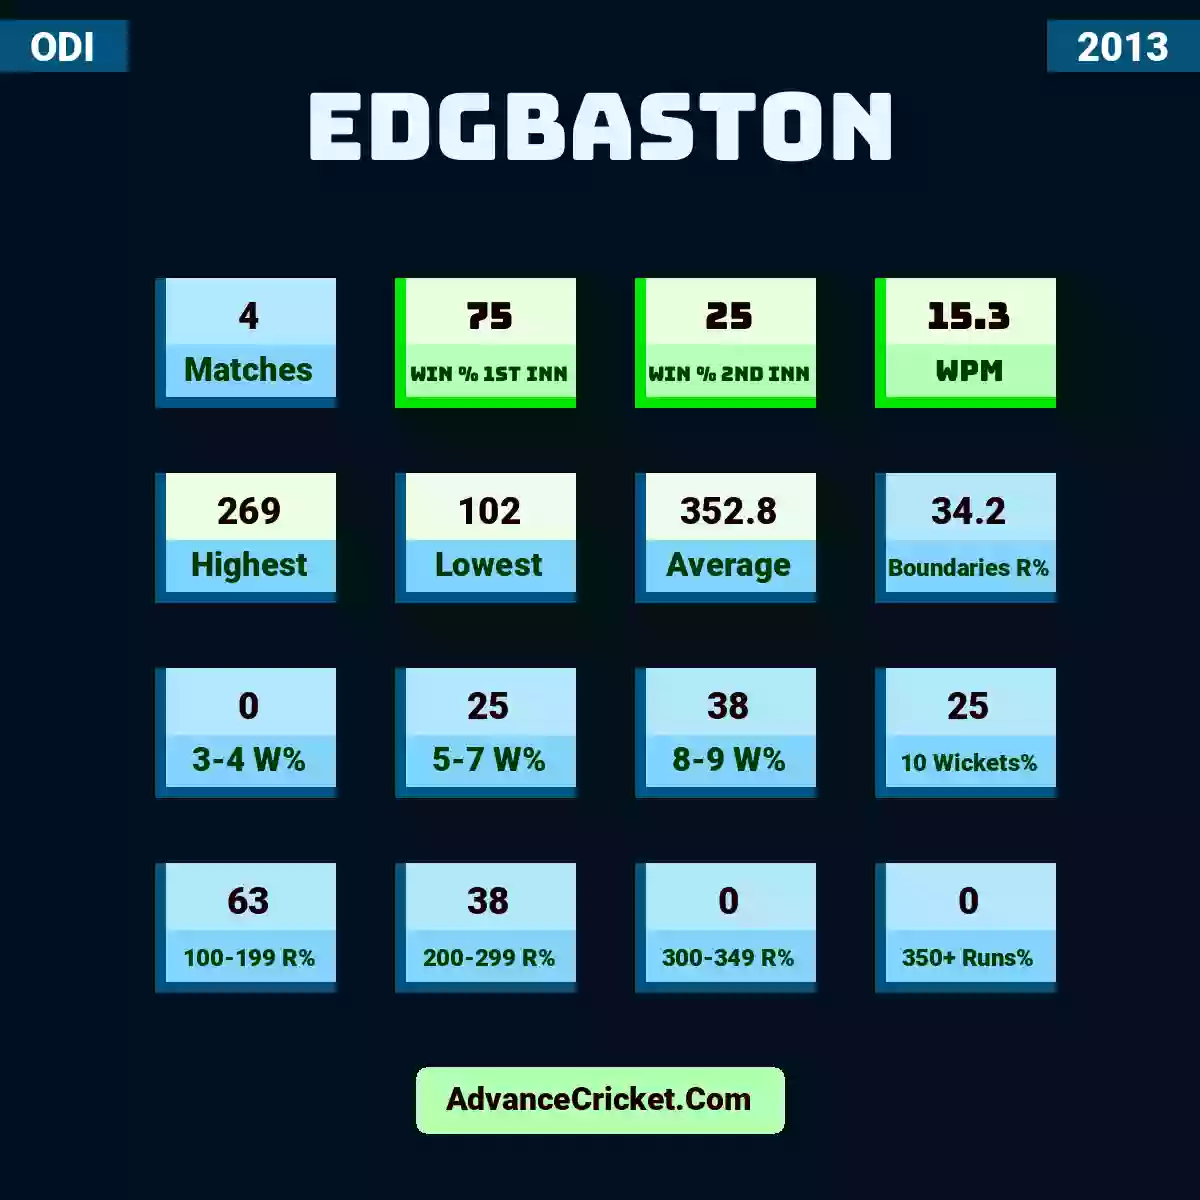 Image showing Edgbaston with Matches: 4, Win % 1st Inn: 75, Win % 2nd Inn: 25, WPM: 15.3, Highest: 269, Lowest: 102, Average: 352.8, Boundaries R%: 34.2, 3-4 W%: 0, 5-7 W%: 25, 8-9 W%: 38, 10 Wickets%: 25, 100-199 R%: 63, 200-299 R%: 38, 300-349 R%: 0, 350+ Runs%: 0.